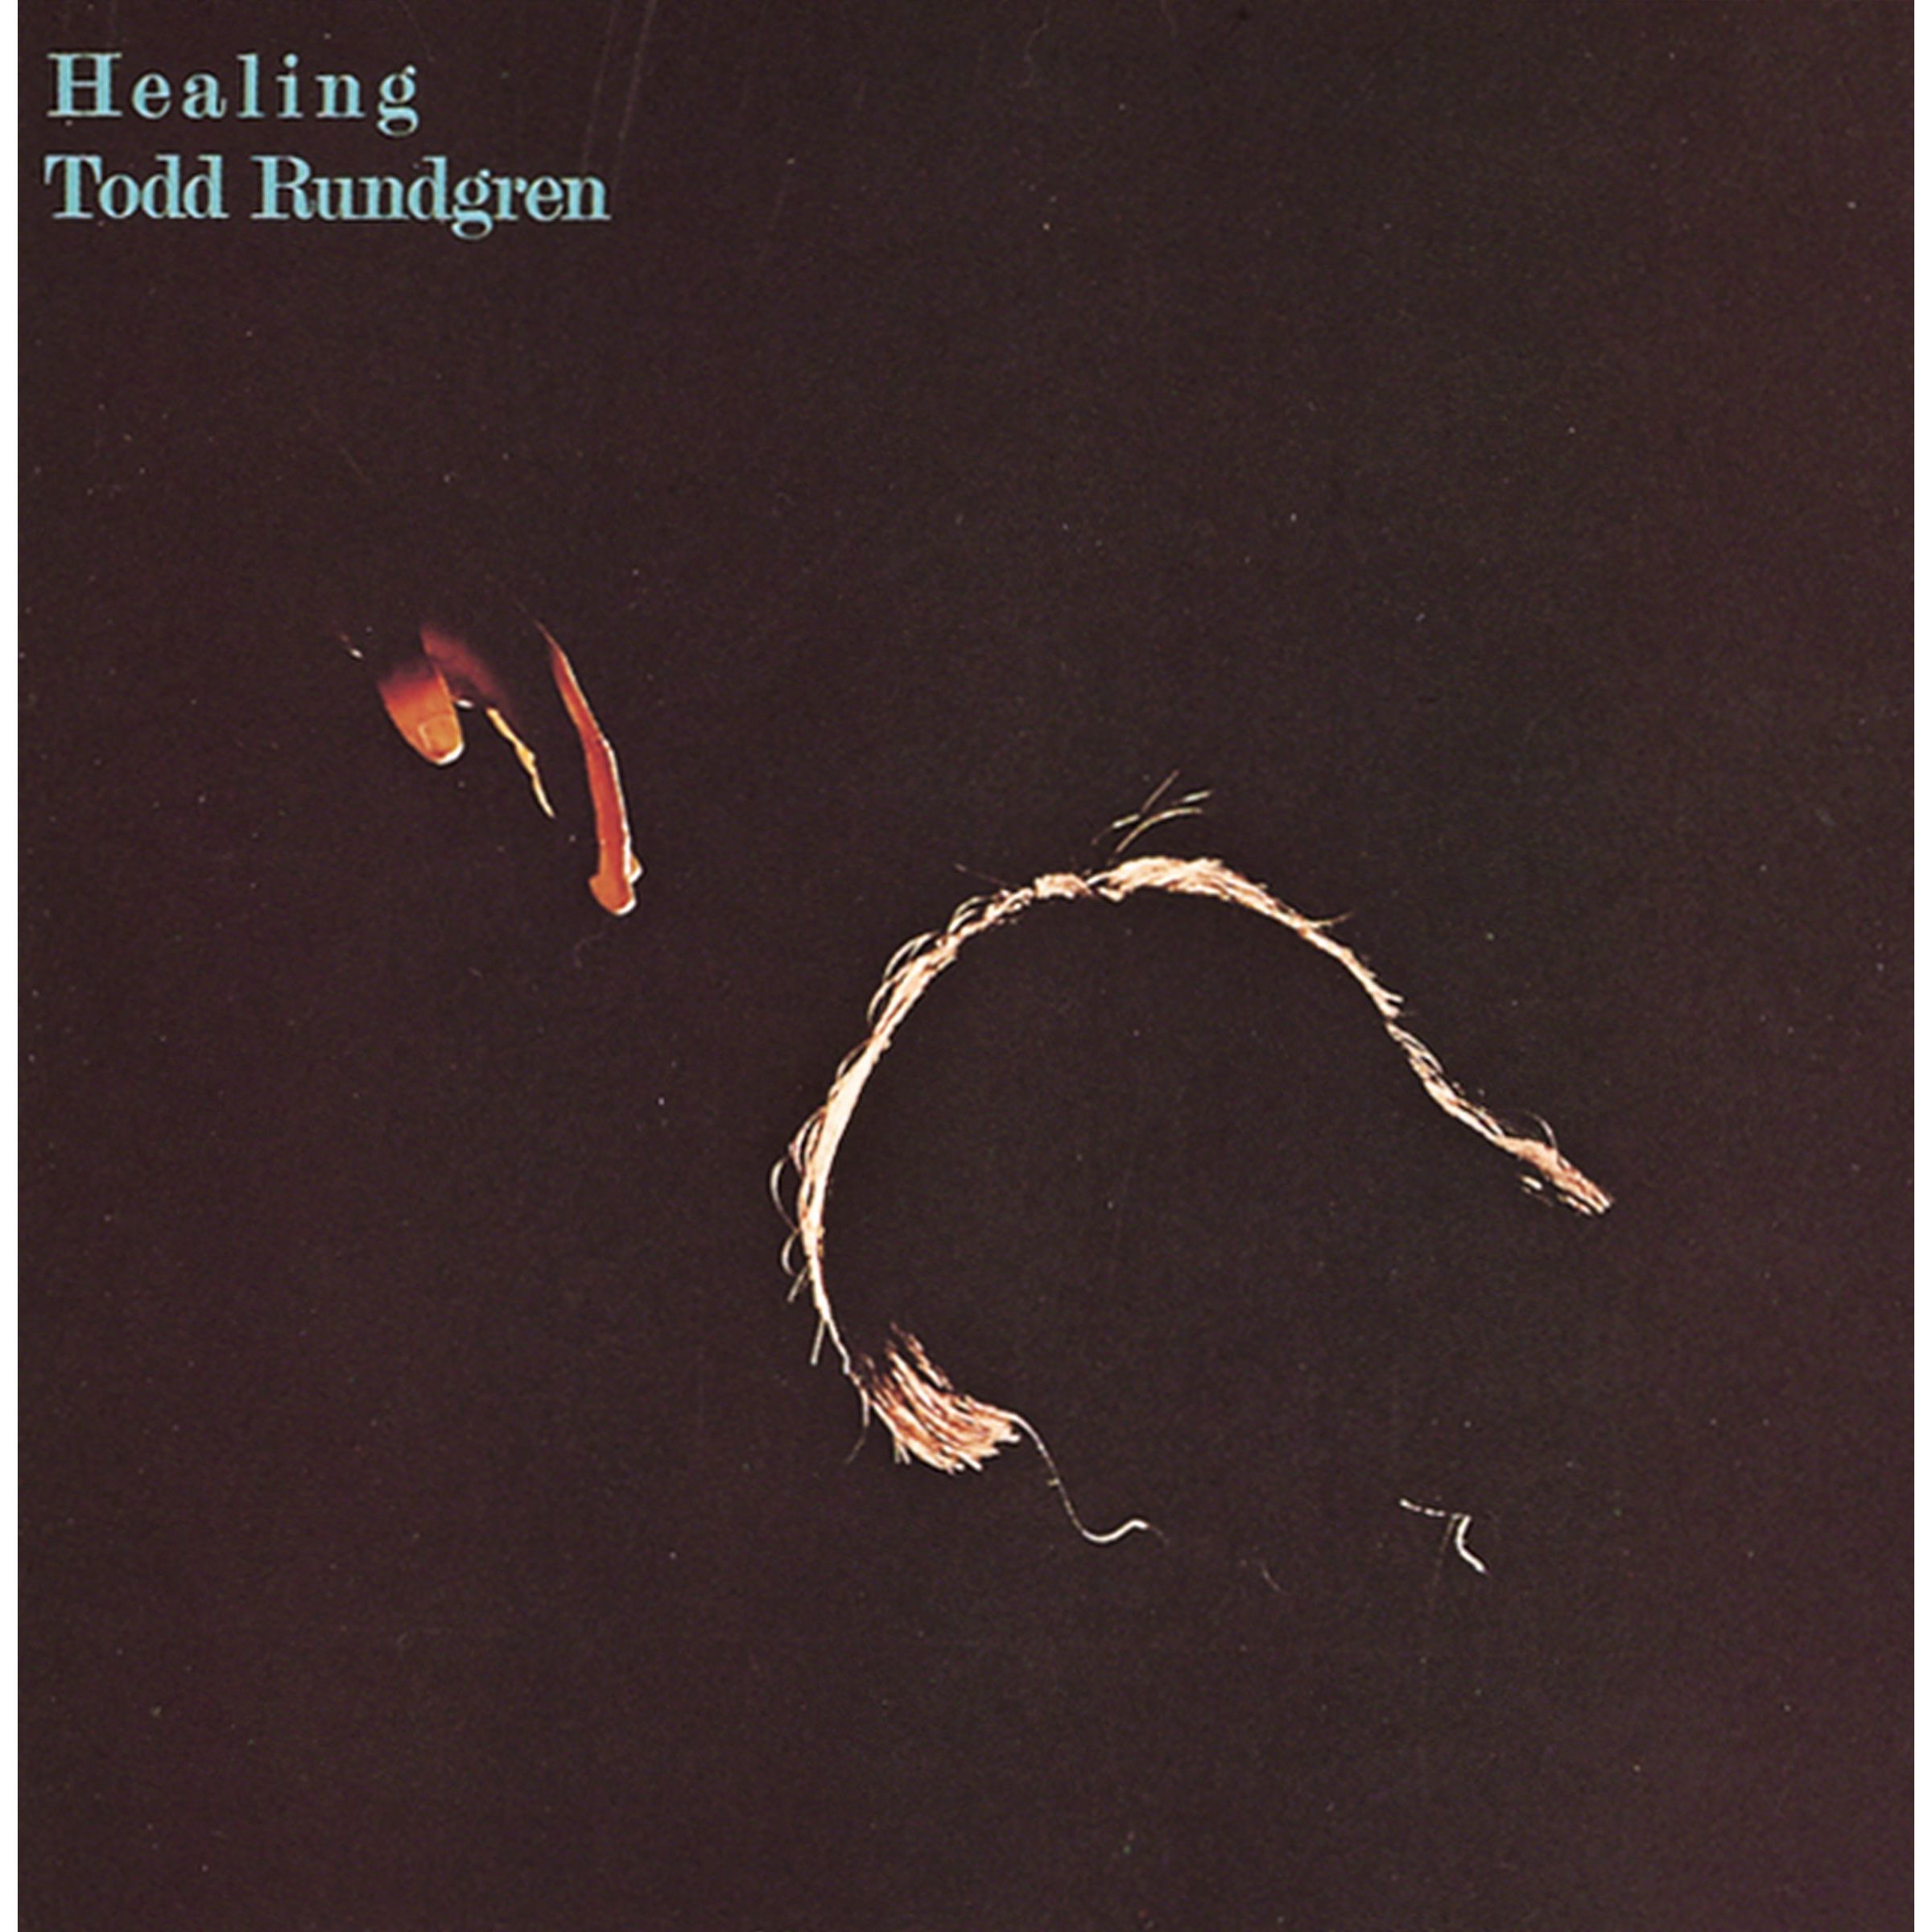 Todd Rundgren – Healing